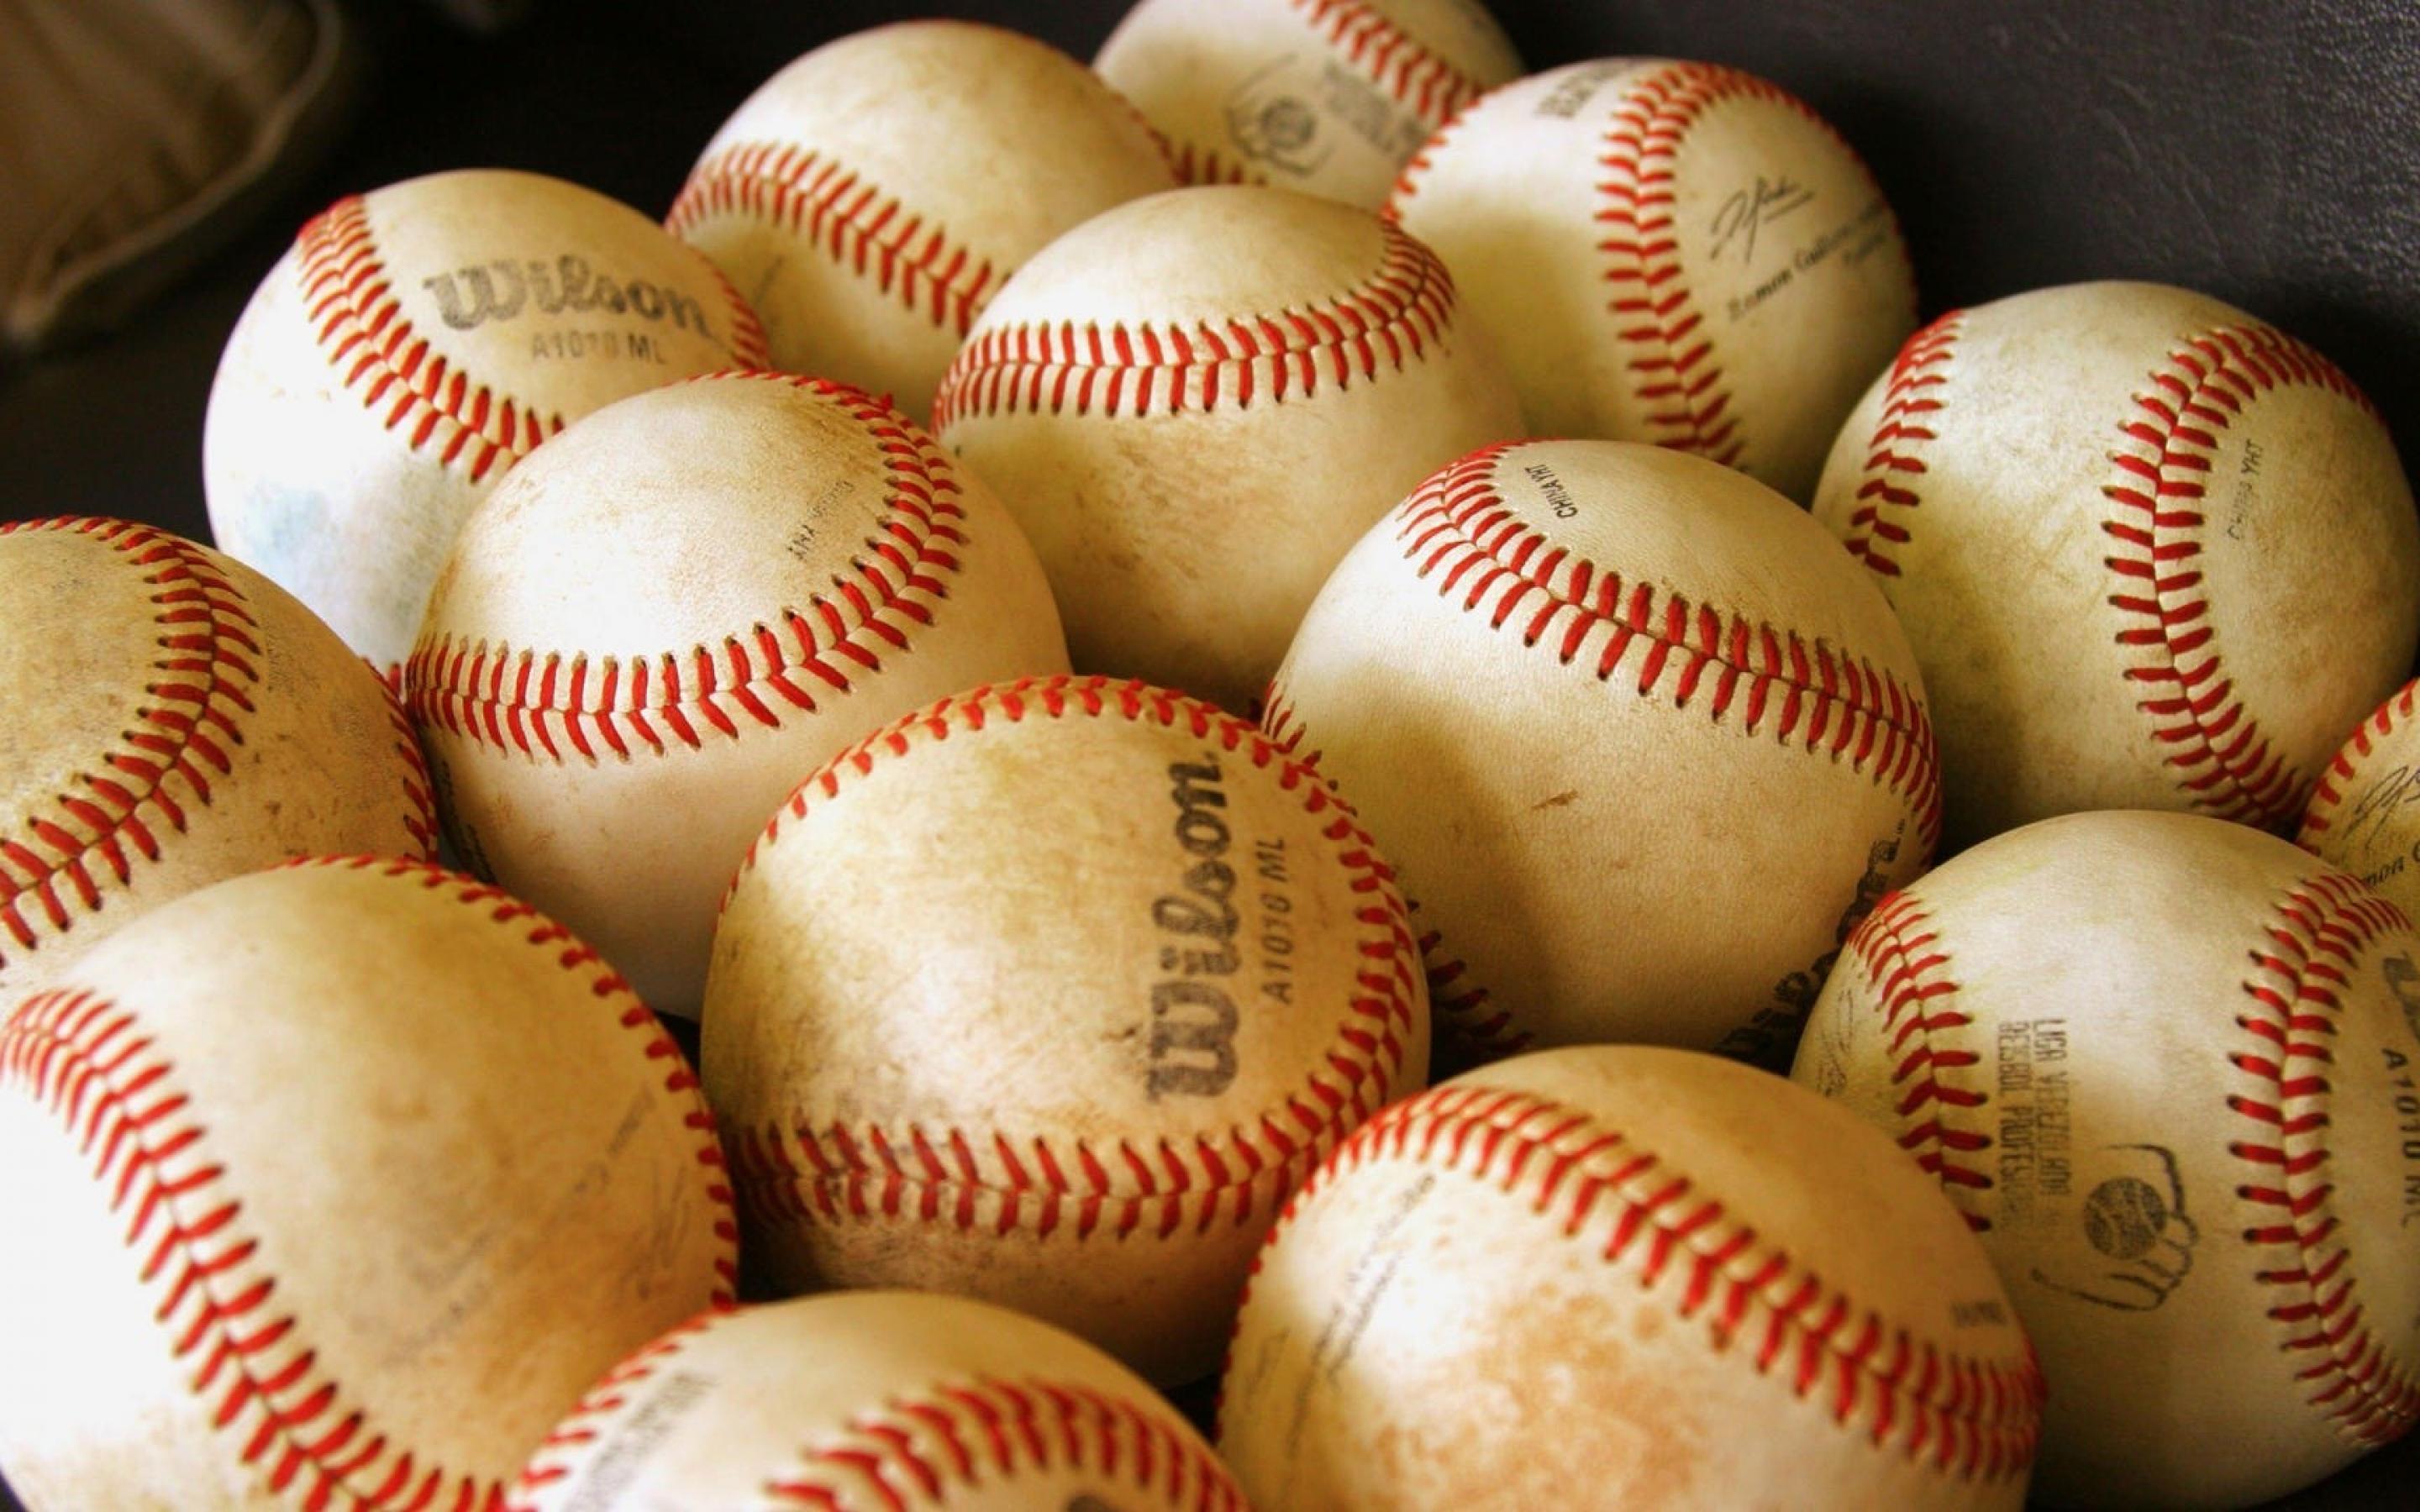 Baseball ball. Бейсбольный мяч. Мяч для бейсбола. Мячик для Софтбола. Бейсбольный мяч картинка.